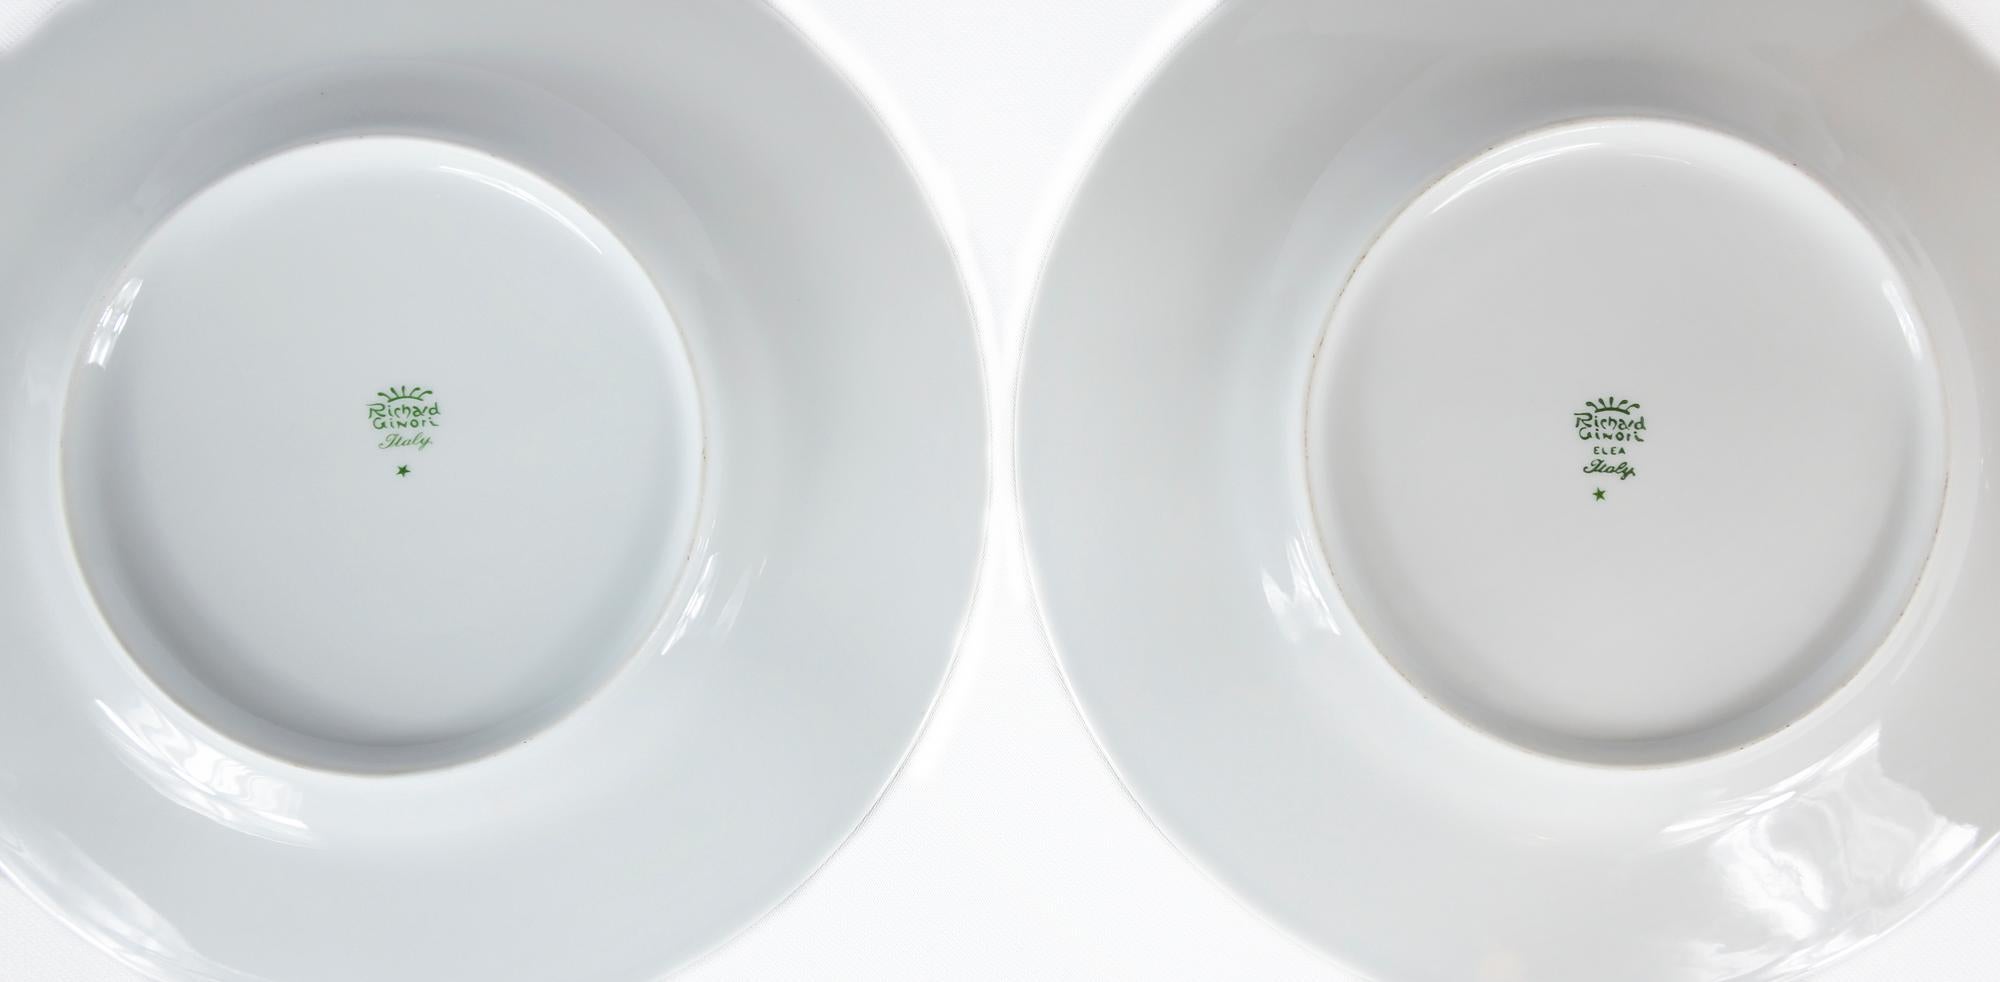 Pair of Italian Richard Ginori Porcelain Plates For Sale 2